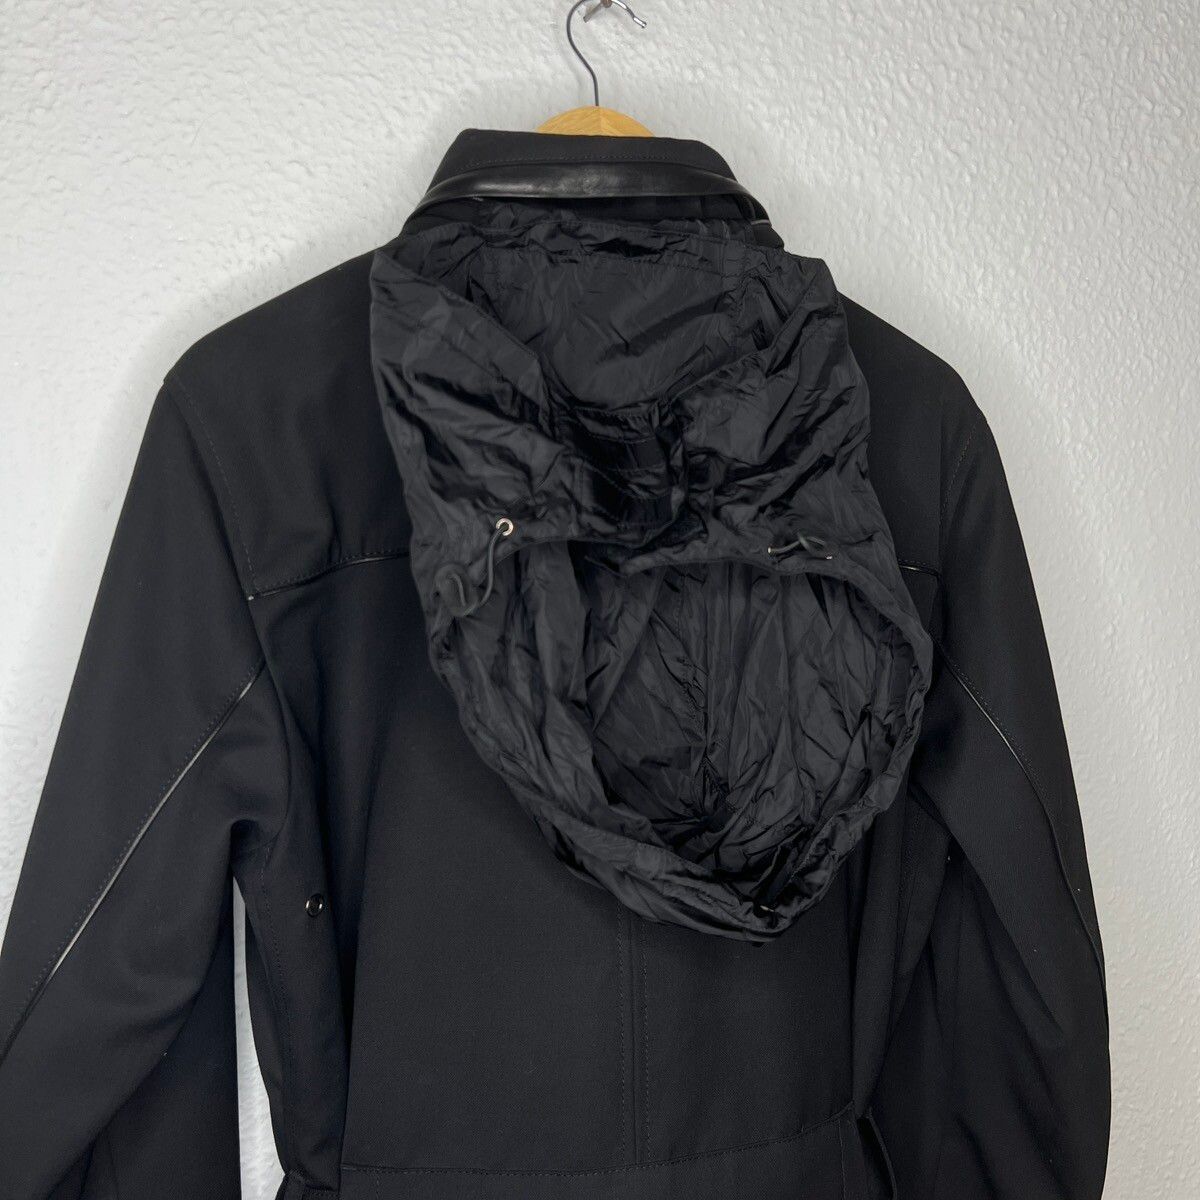 Prada Prada Milano Military Jacket Belted Coat Black Wool Designer Size US M / EU 48-50 / 2 - 15 Preview